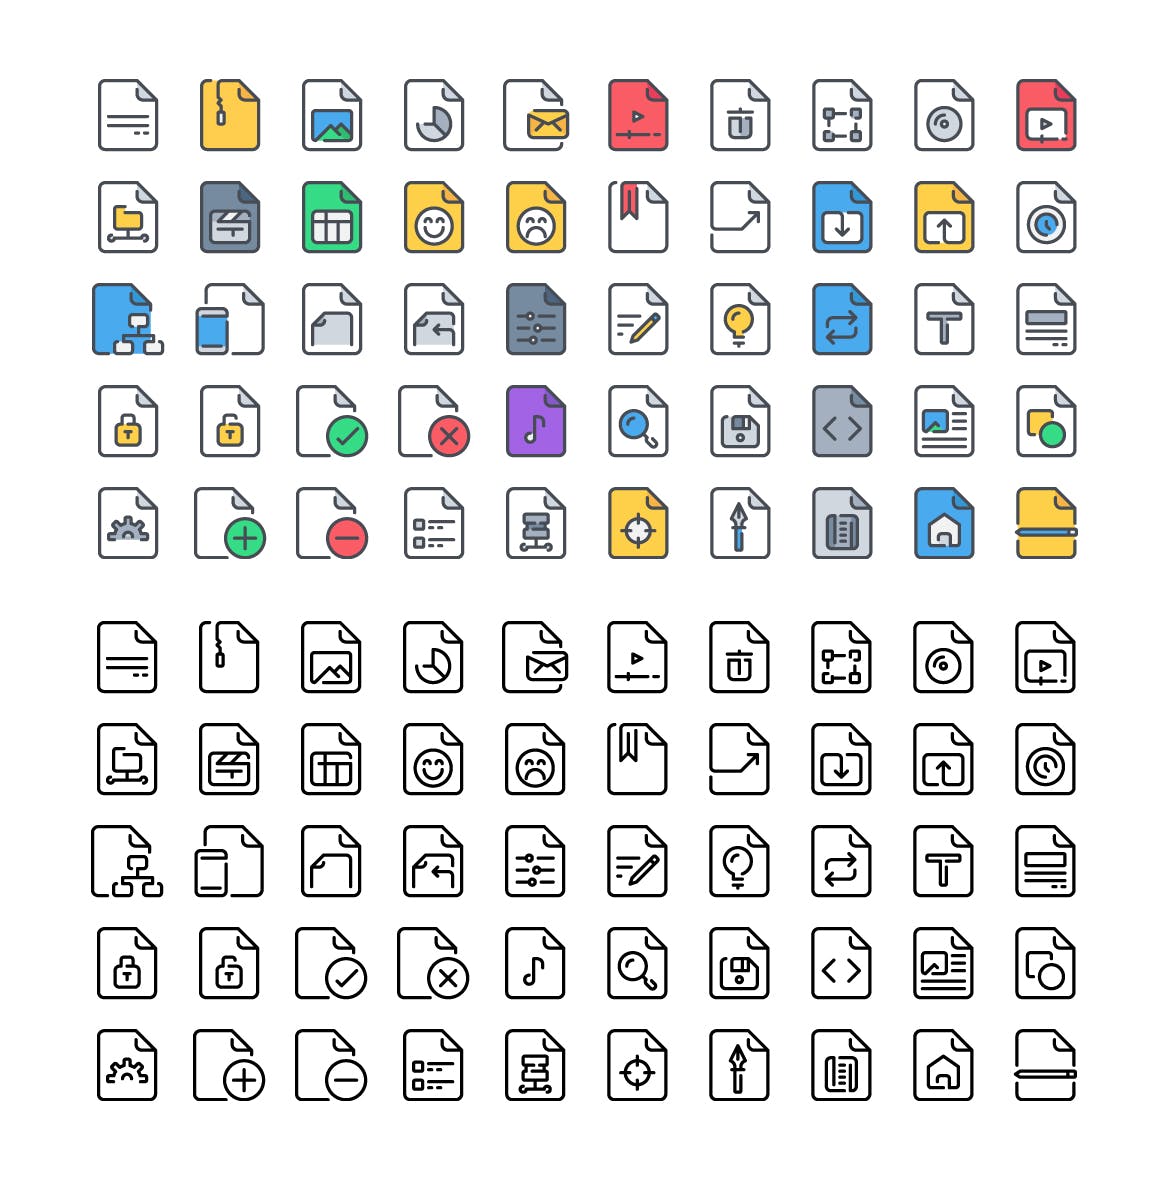 50枚文件/文档图标设计素材 50 File and Document icon set插图2